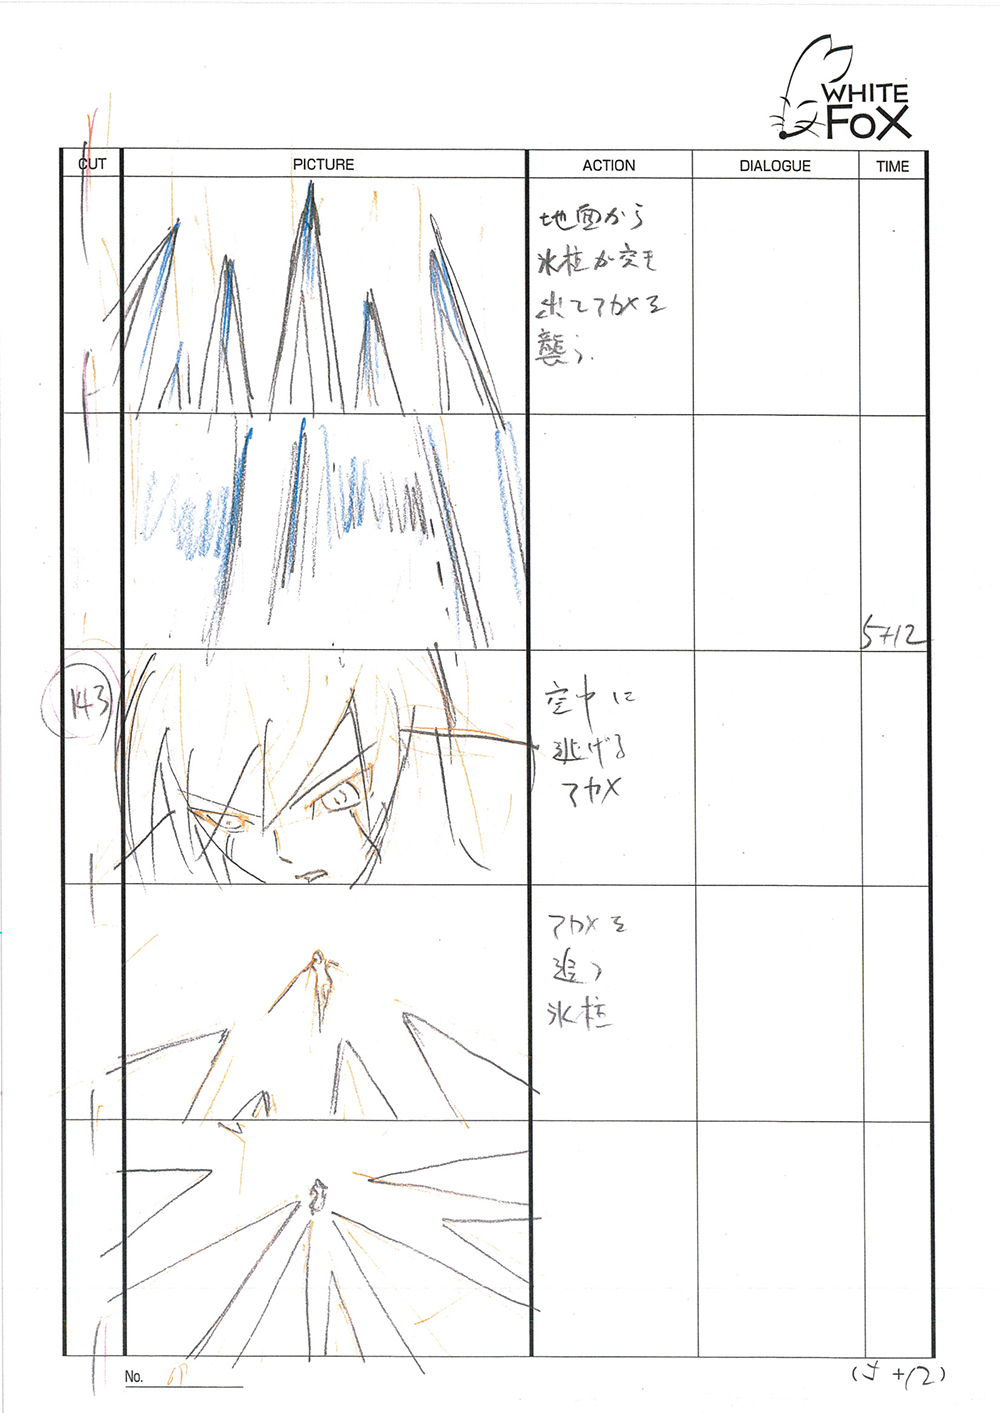 Akame ga Kill Episode 24 Storyboard Leak 072